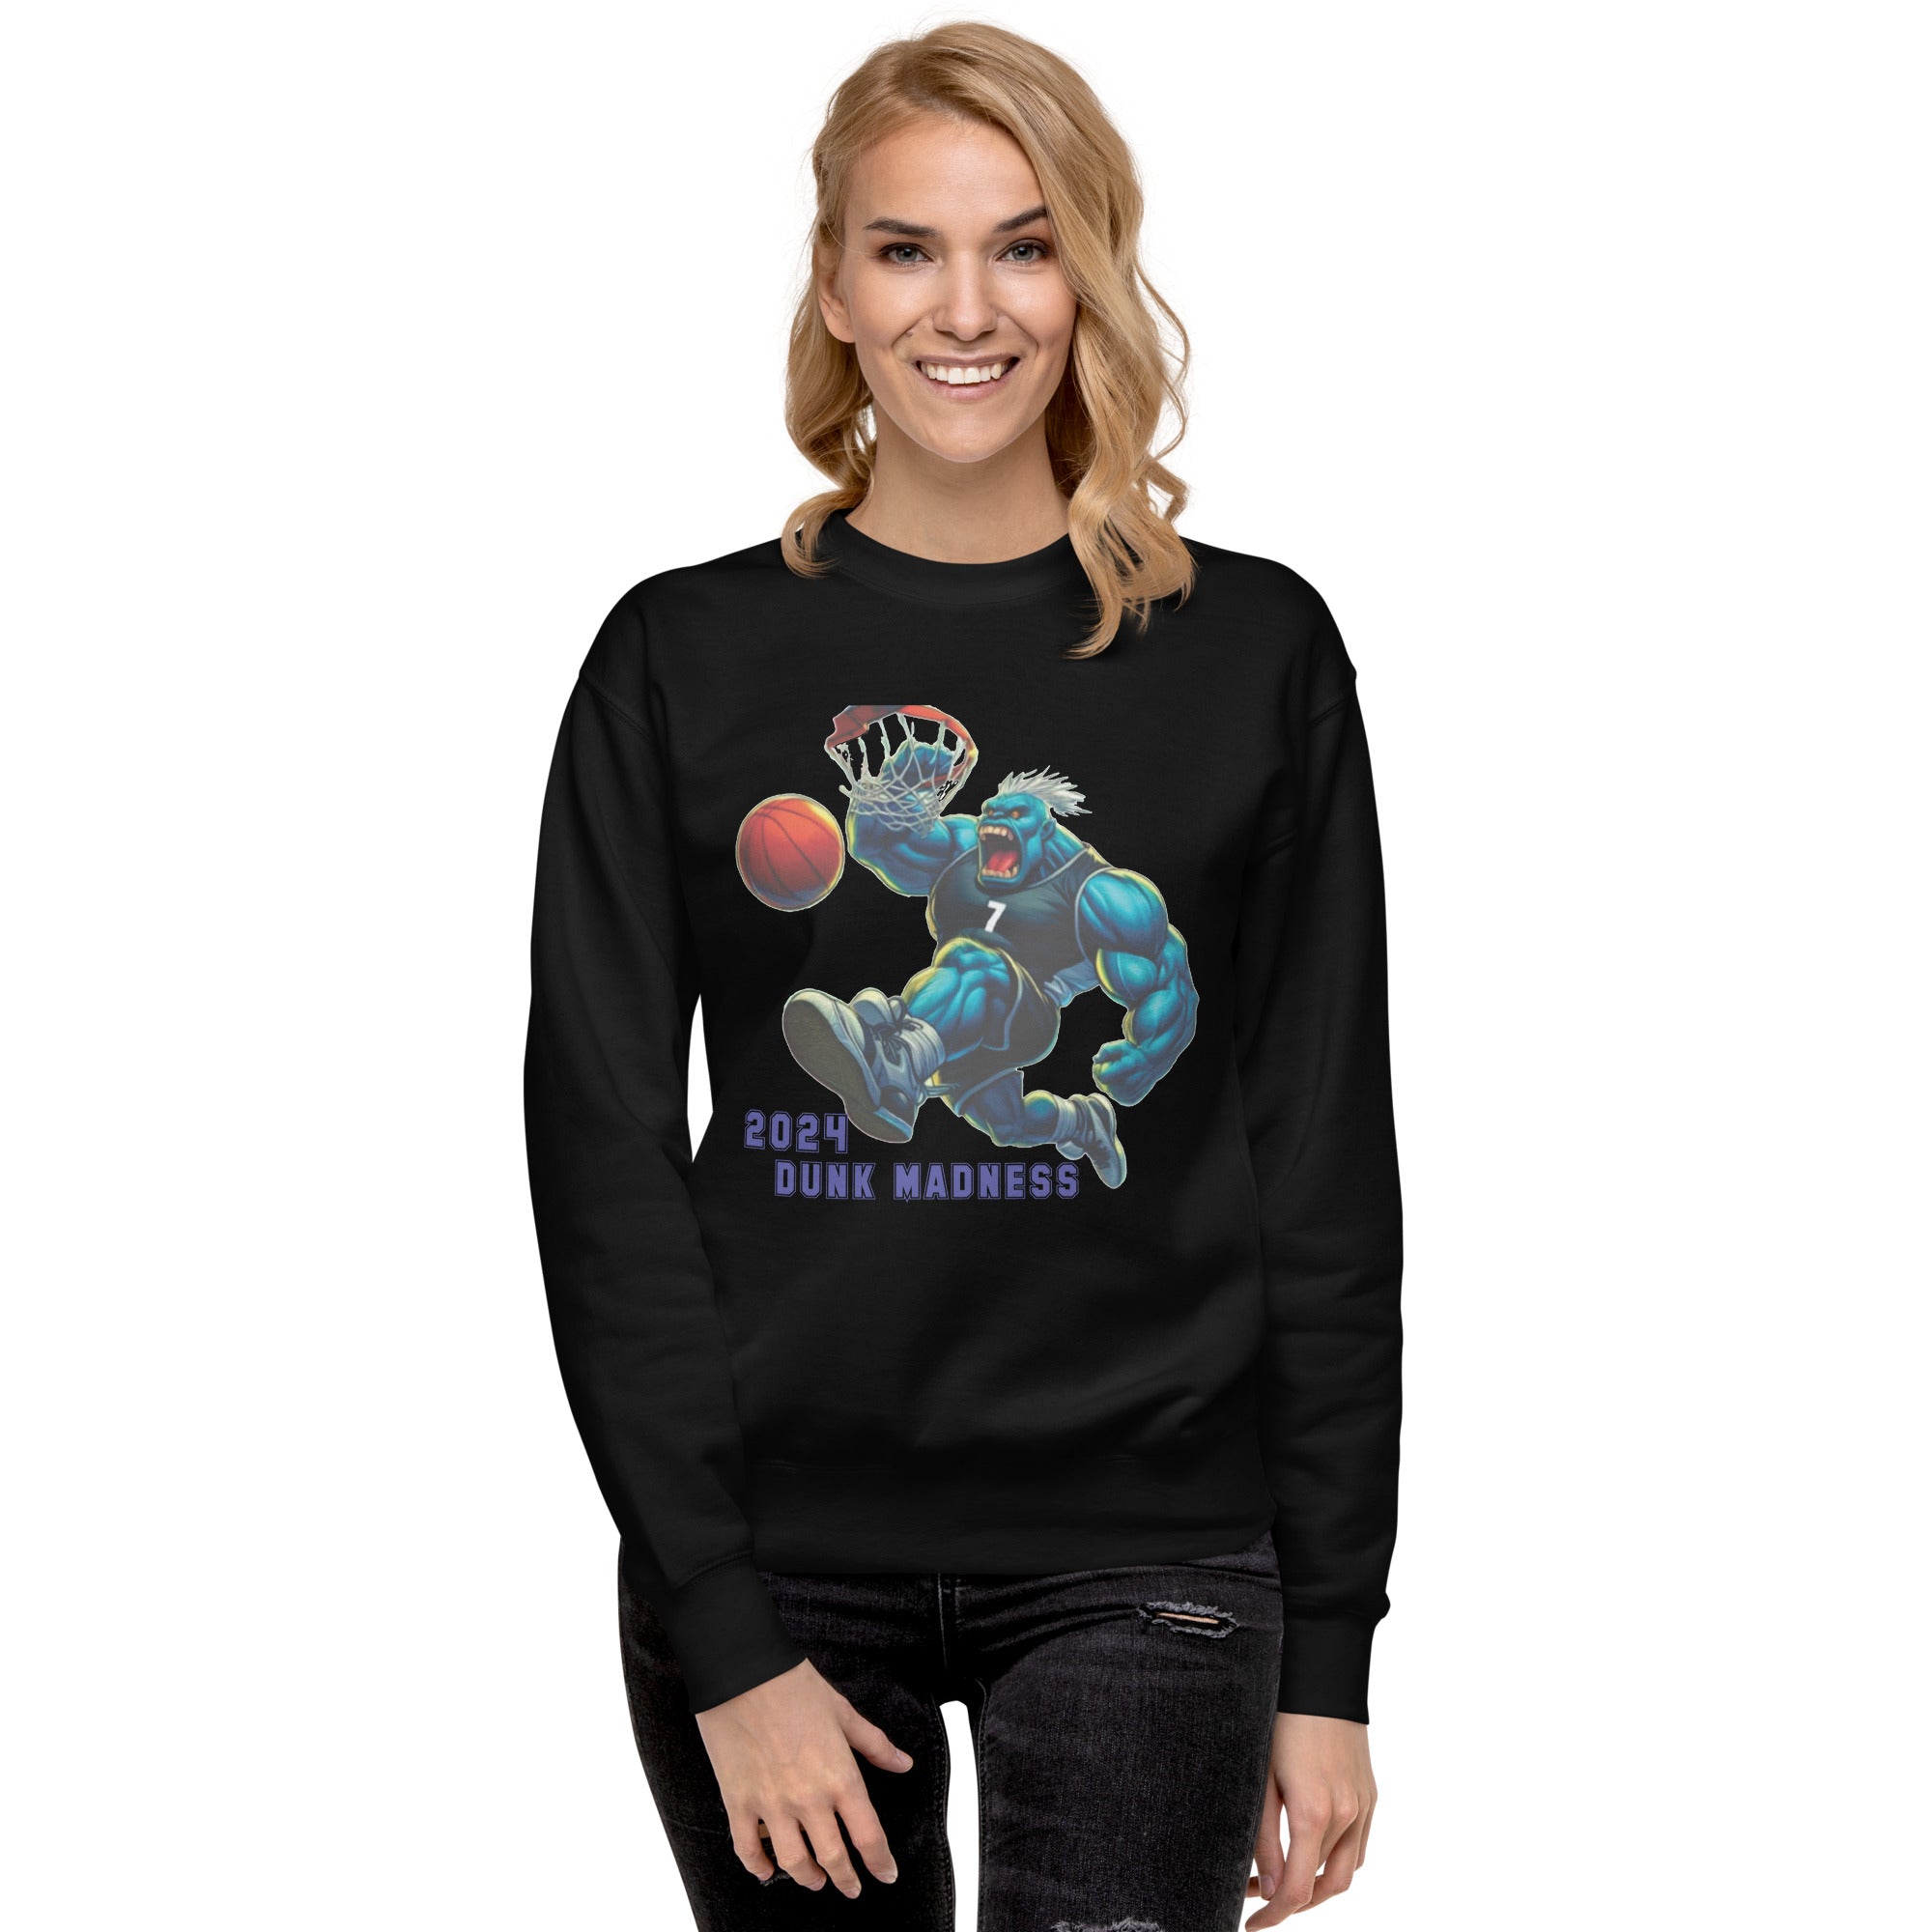 Dunk Madness 2024  Sweatshirt for Women